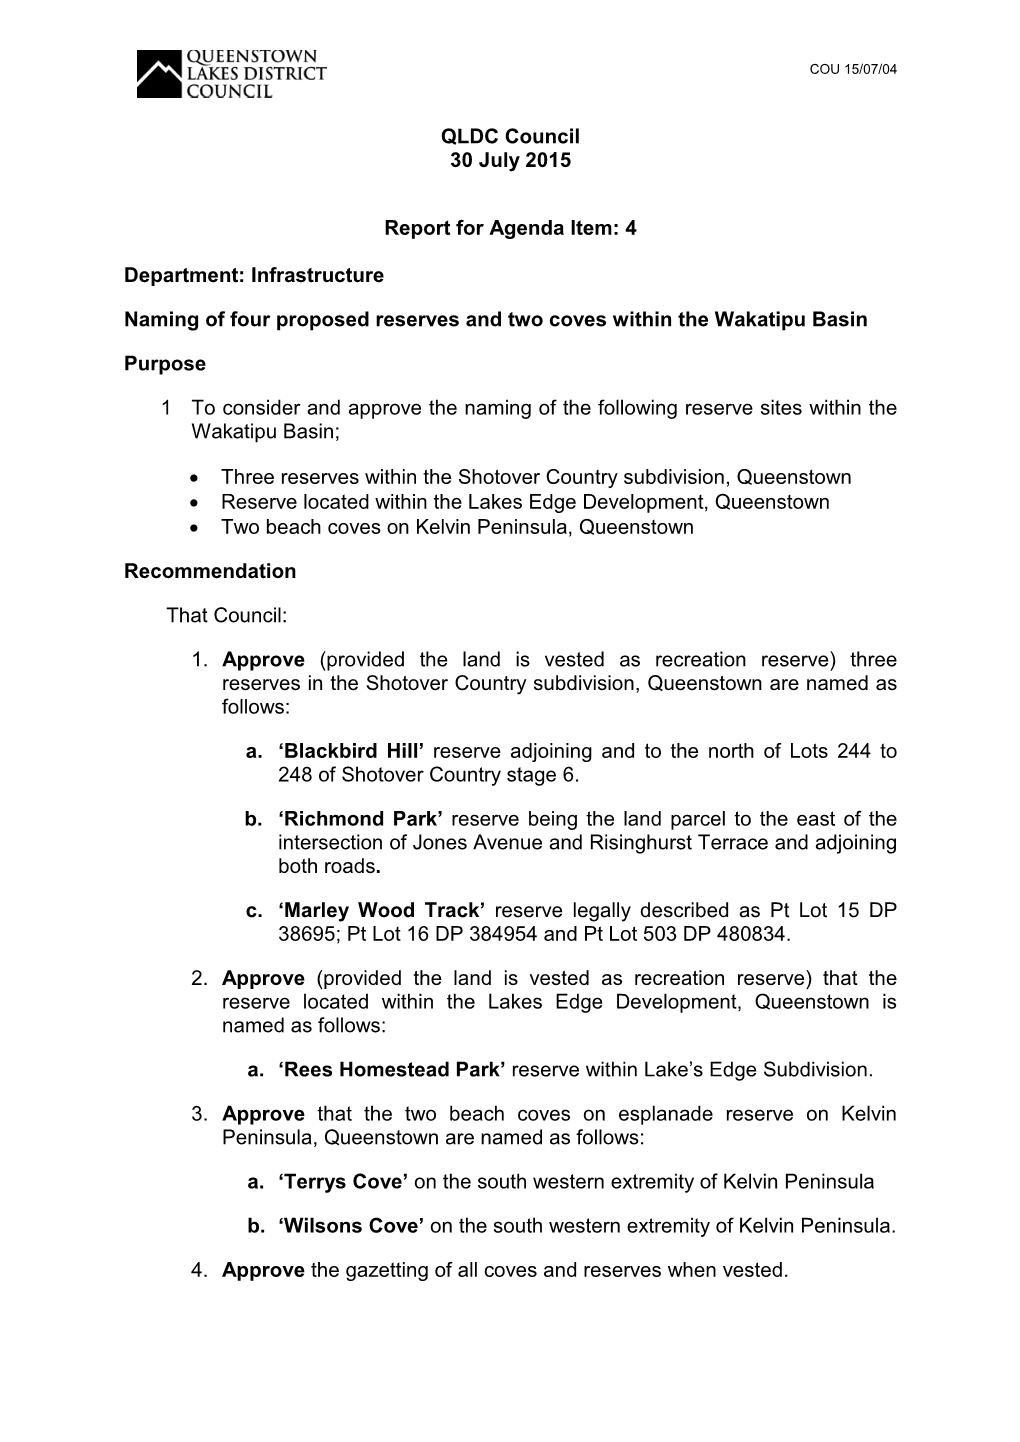 QLDC Council 30 July 2015 Report for Agenda Item: 4 Department